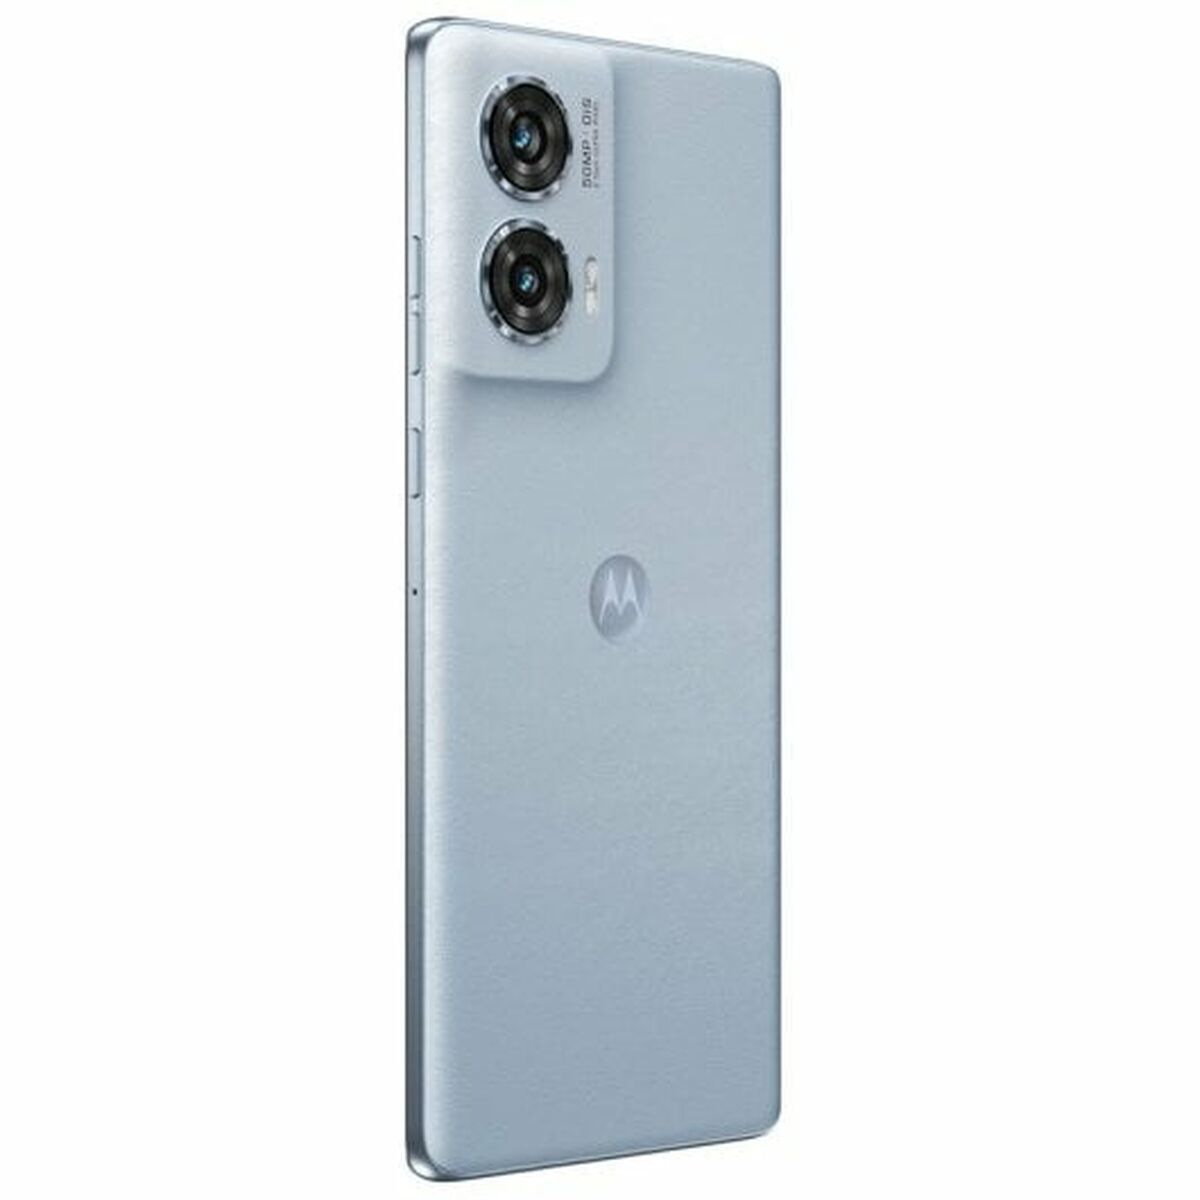 Smartphone Motorola Motorola Edge 50 Fusion 6,7" Octa Core 8 GB RAM 256 GB Blau - CA International  